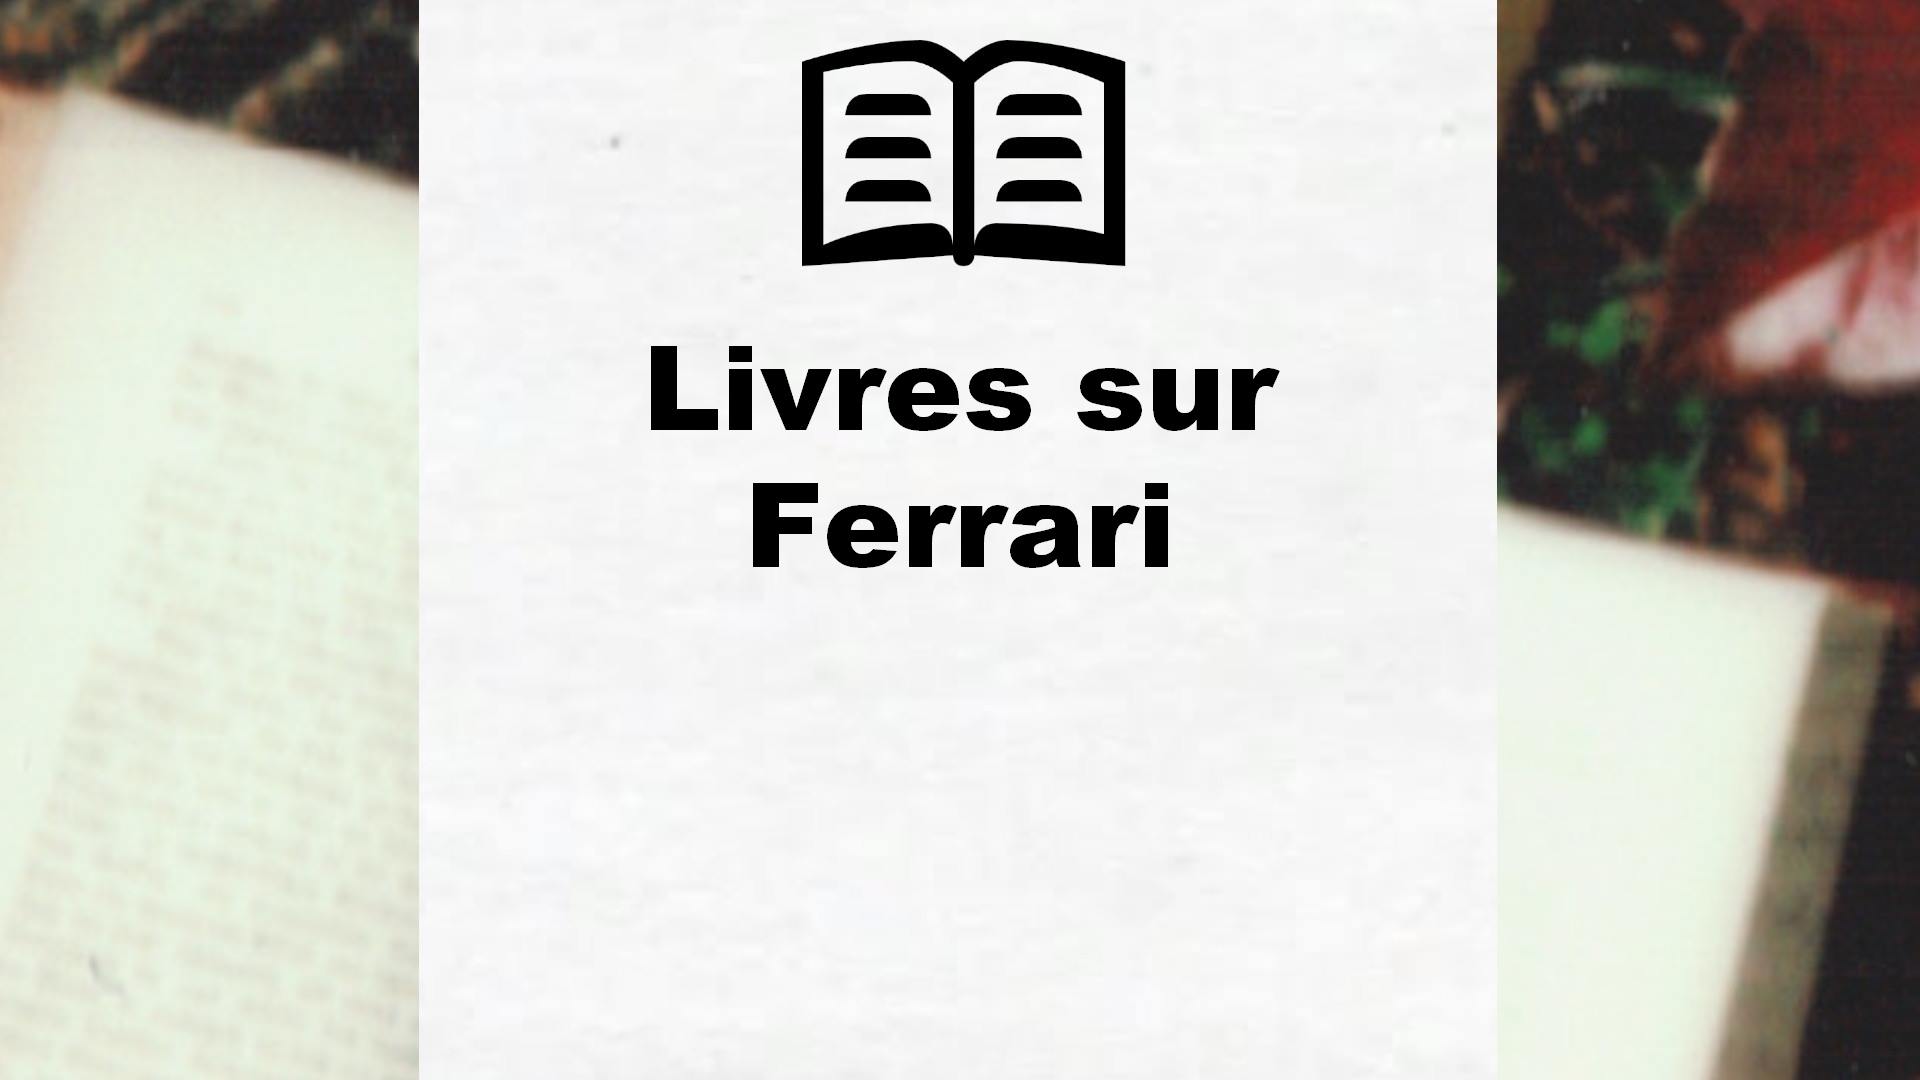 Livres sur Ferrari